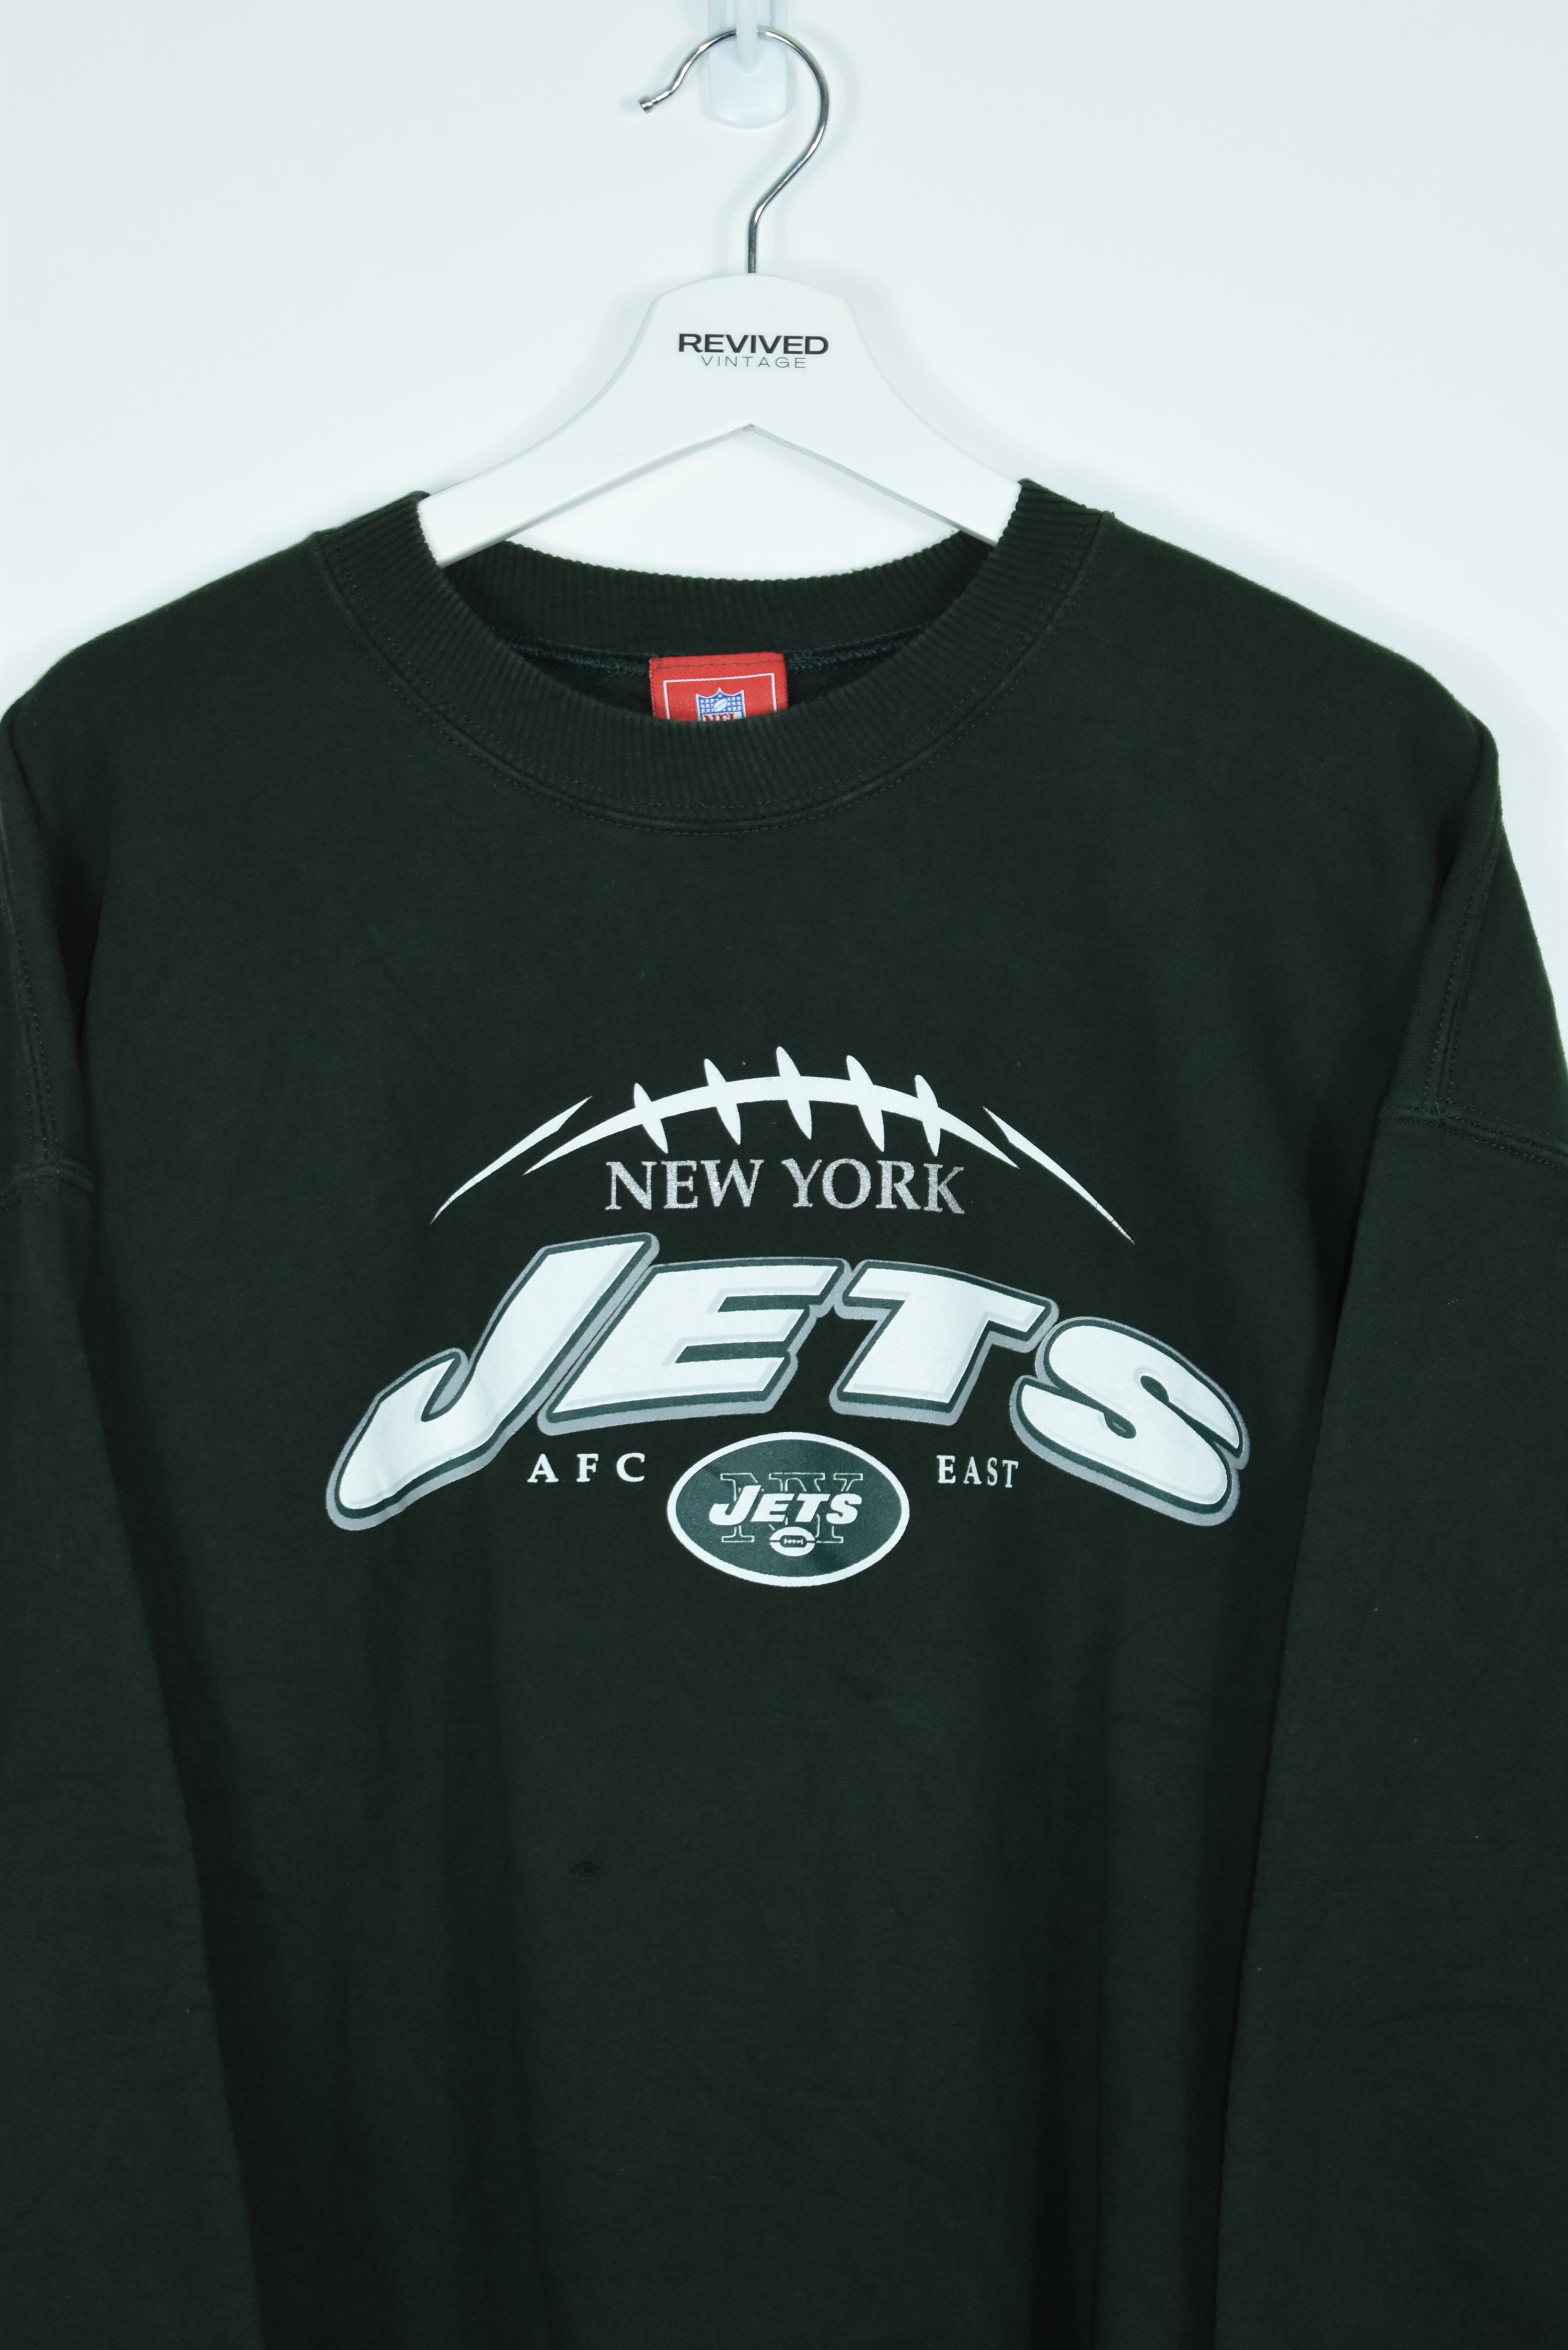 Vintage New York Jets Sweatshirt Large / Xlarge